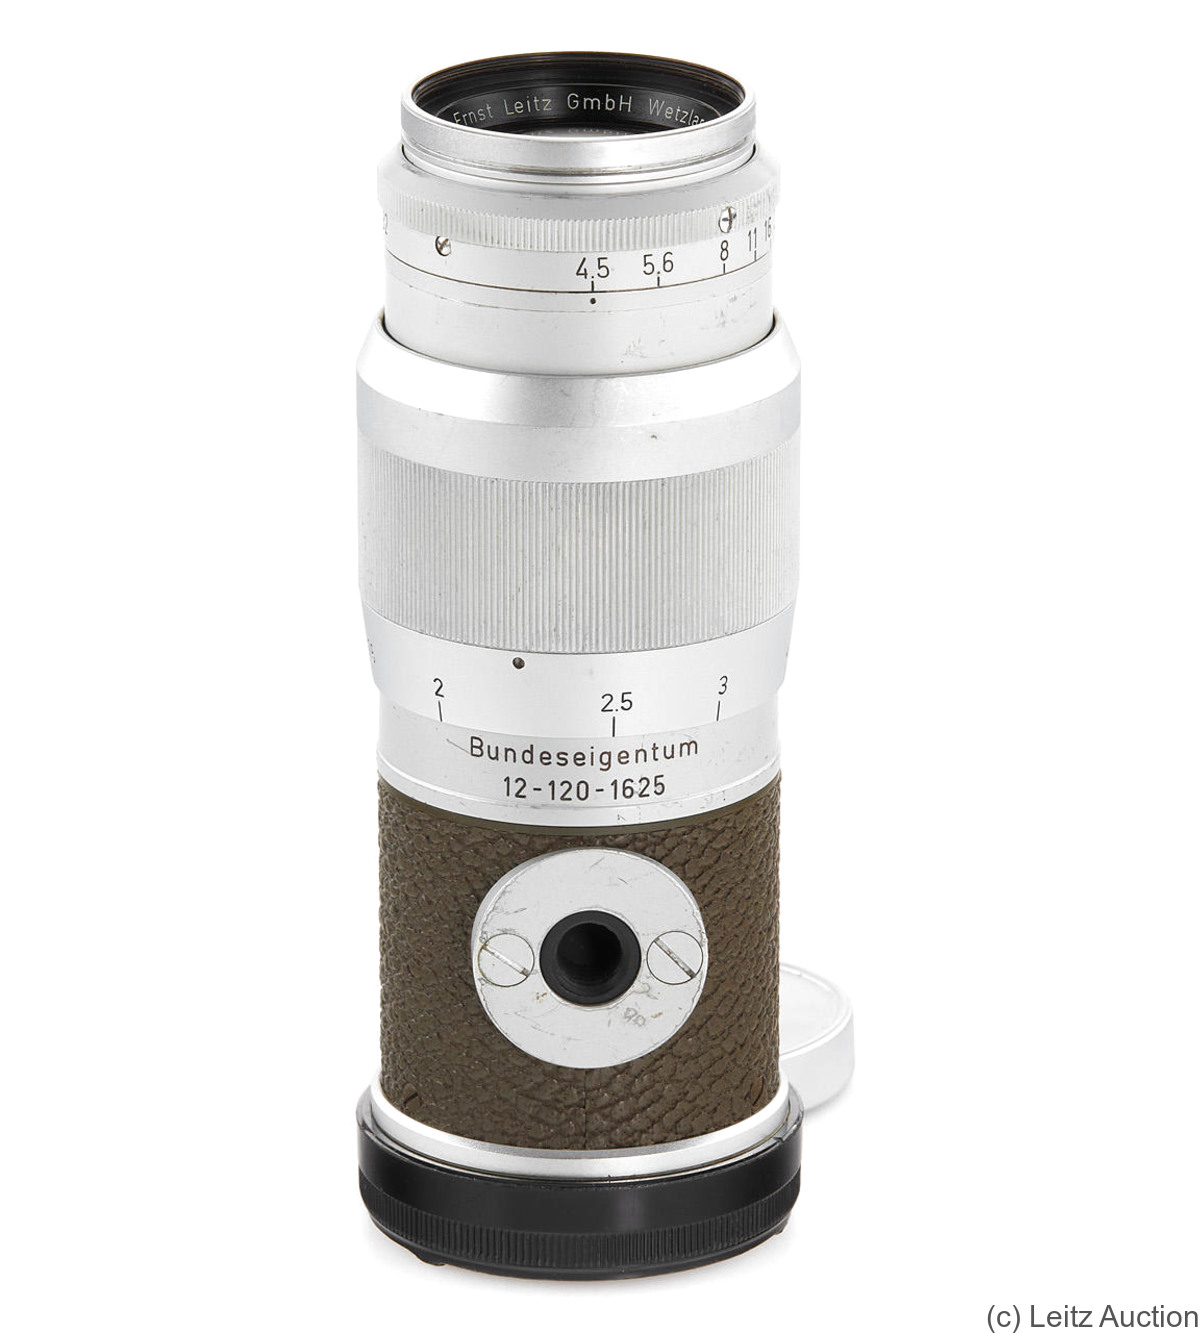 Leitz: 135mm (13.5cm) f4.5 Hektor 'Bundeseigentum' (BM, chrome) camera